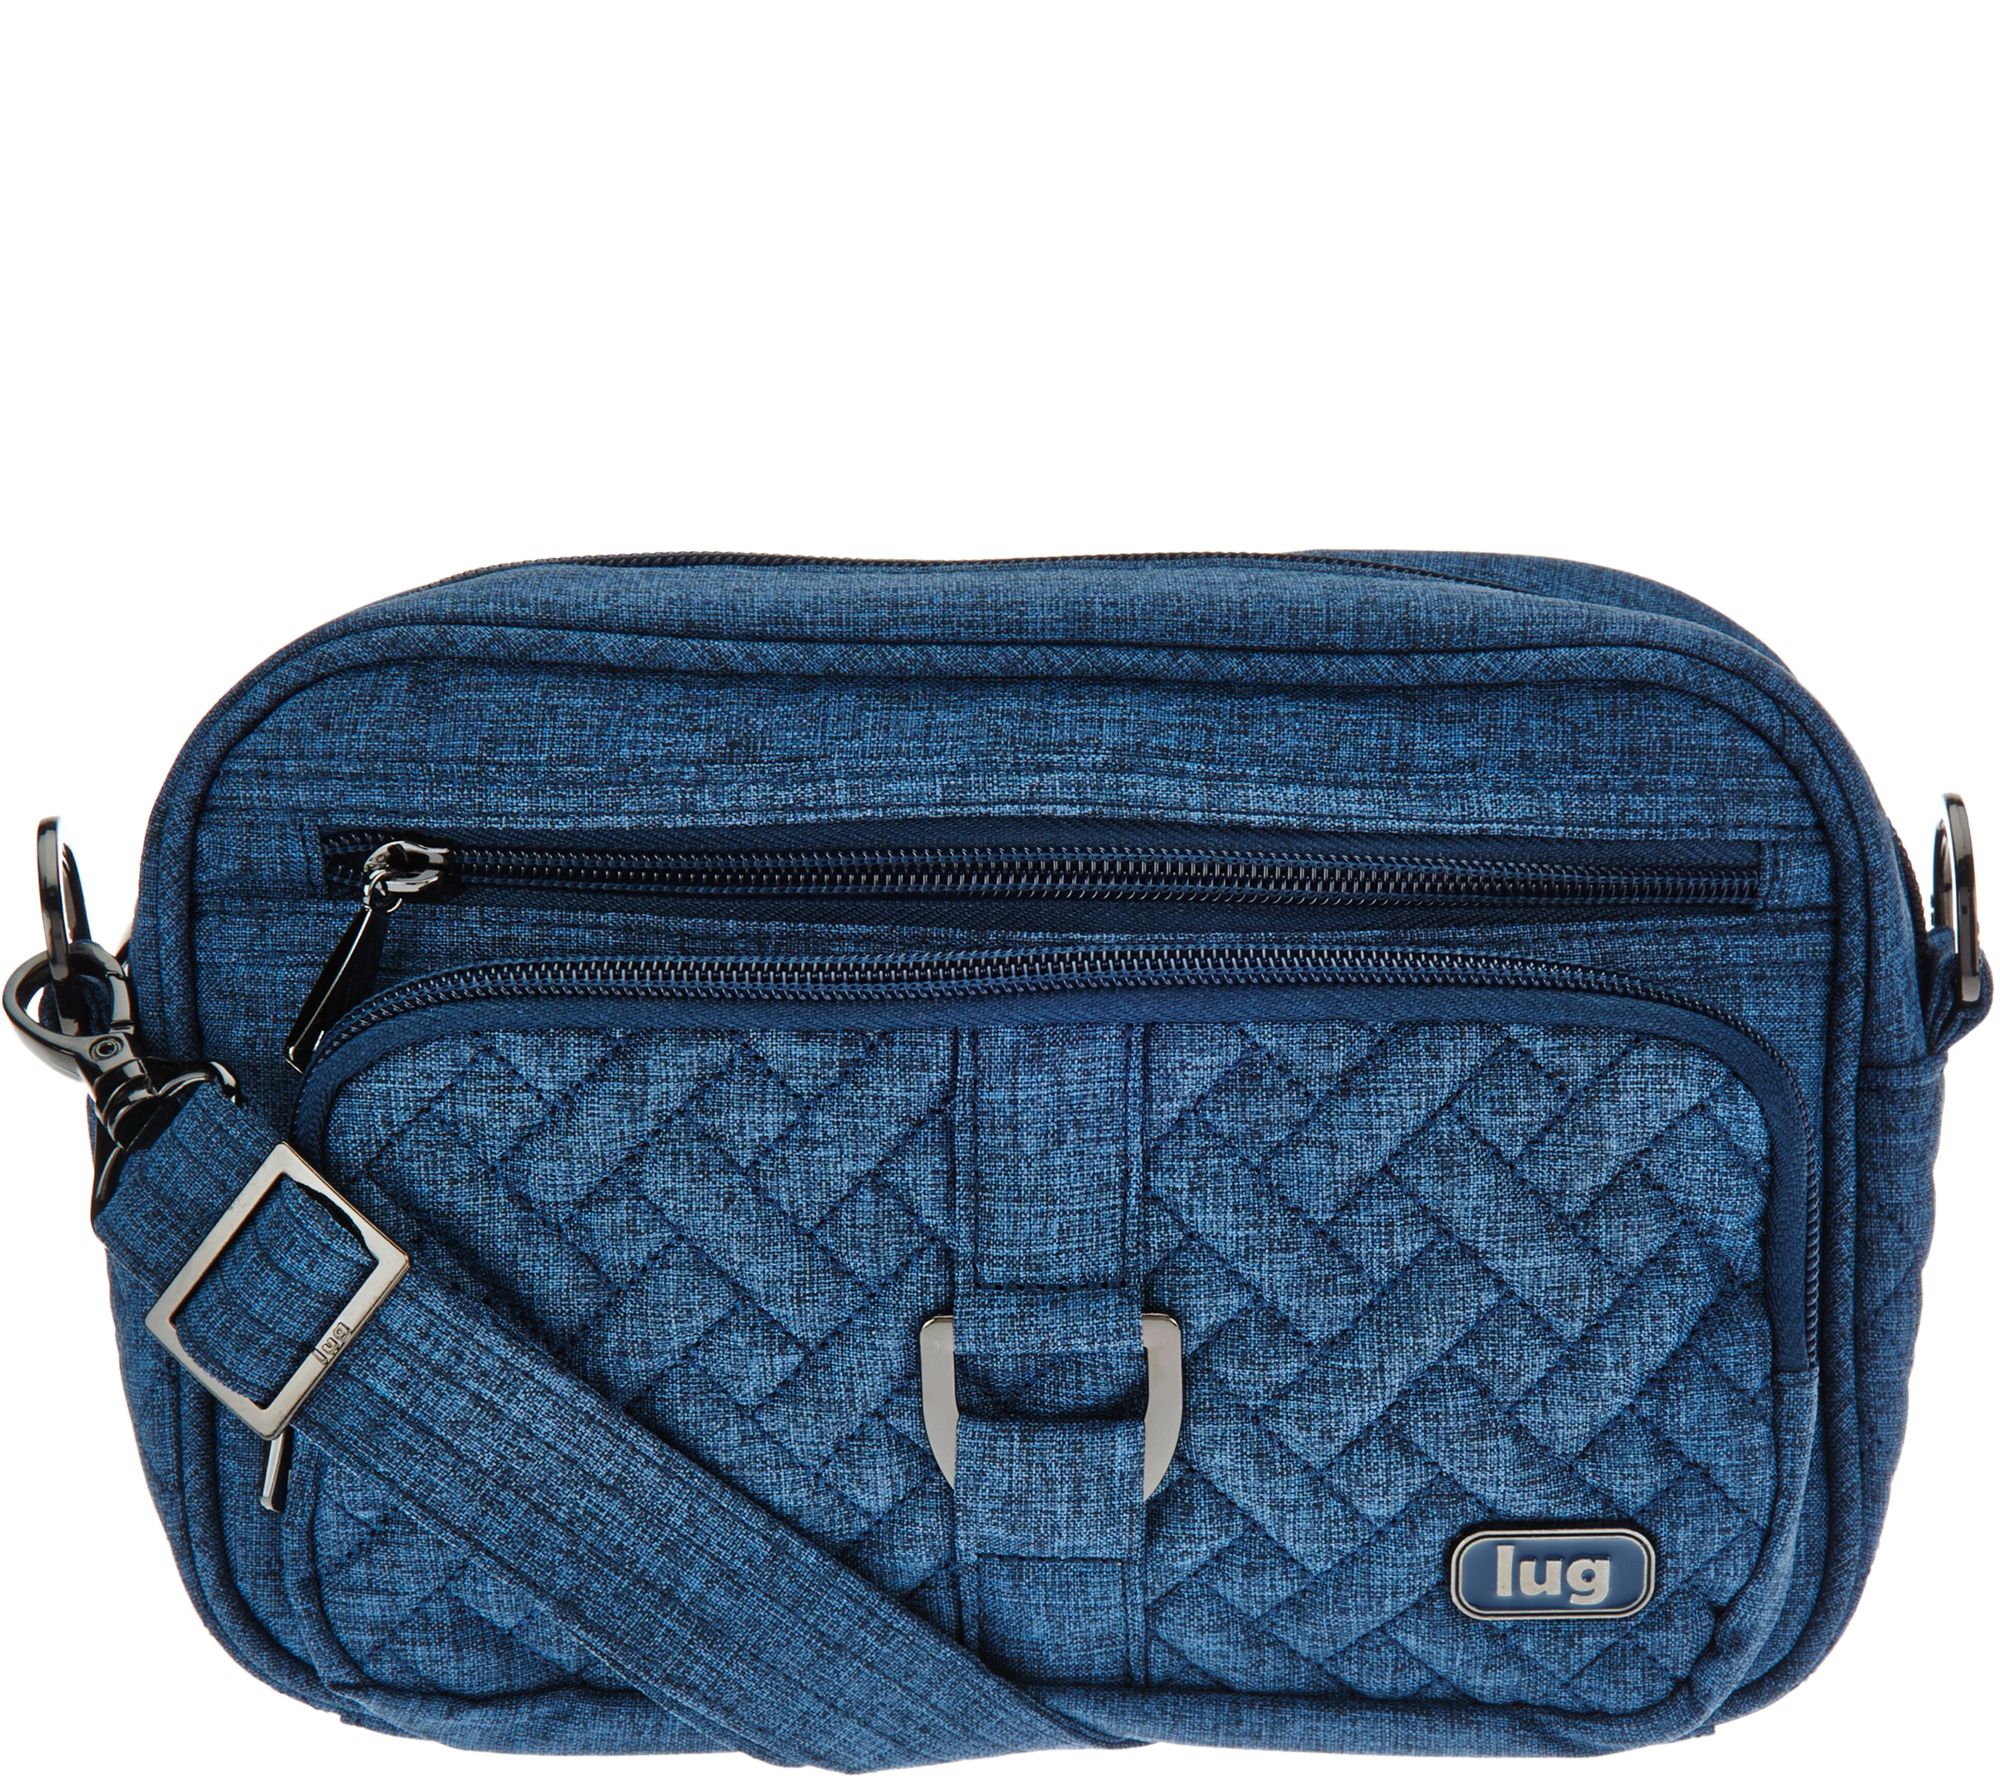 Lug Travel Bags for Women — Handbags & Luggage — www.paulmartinsmith.com